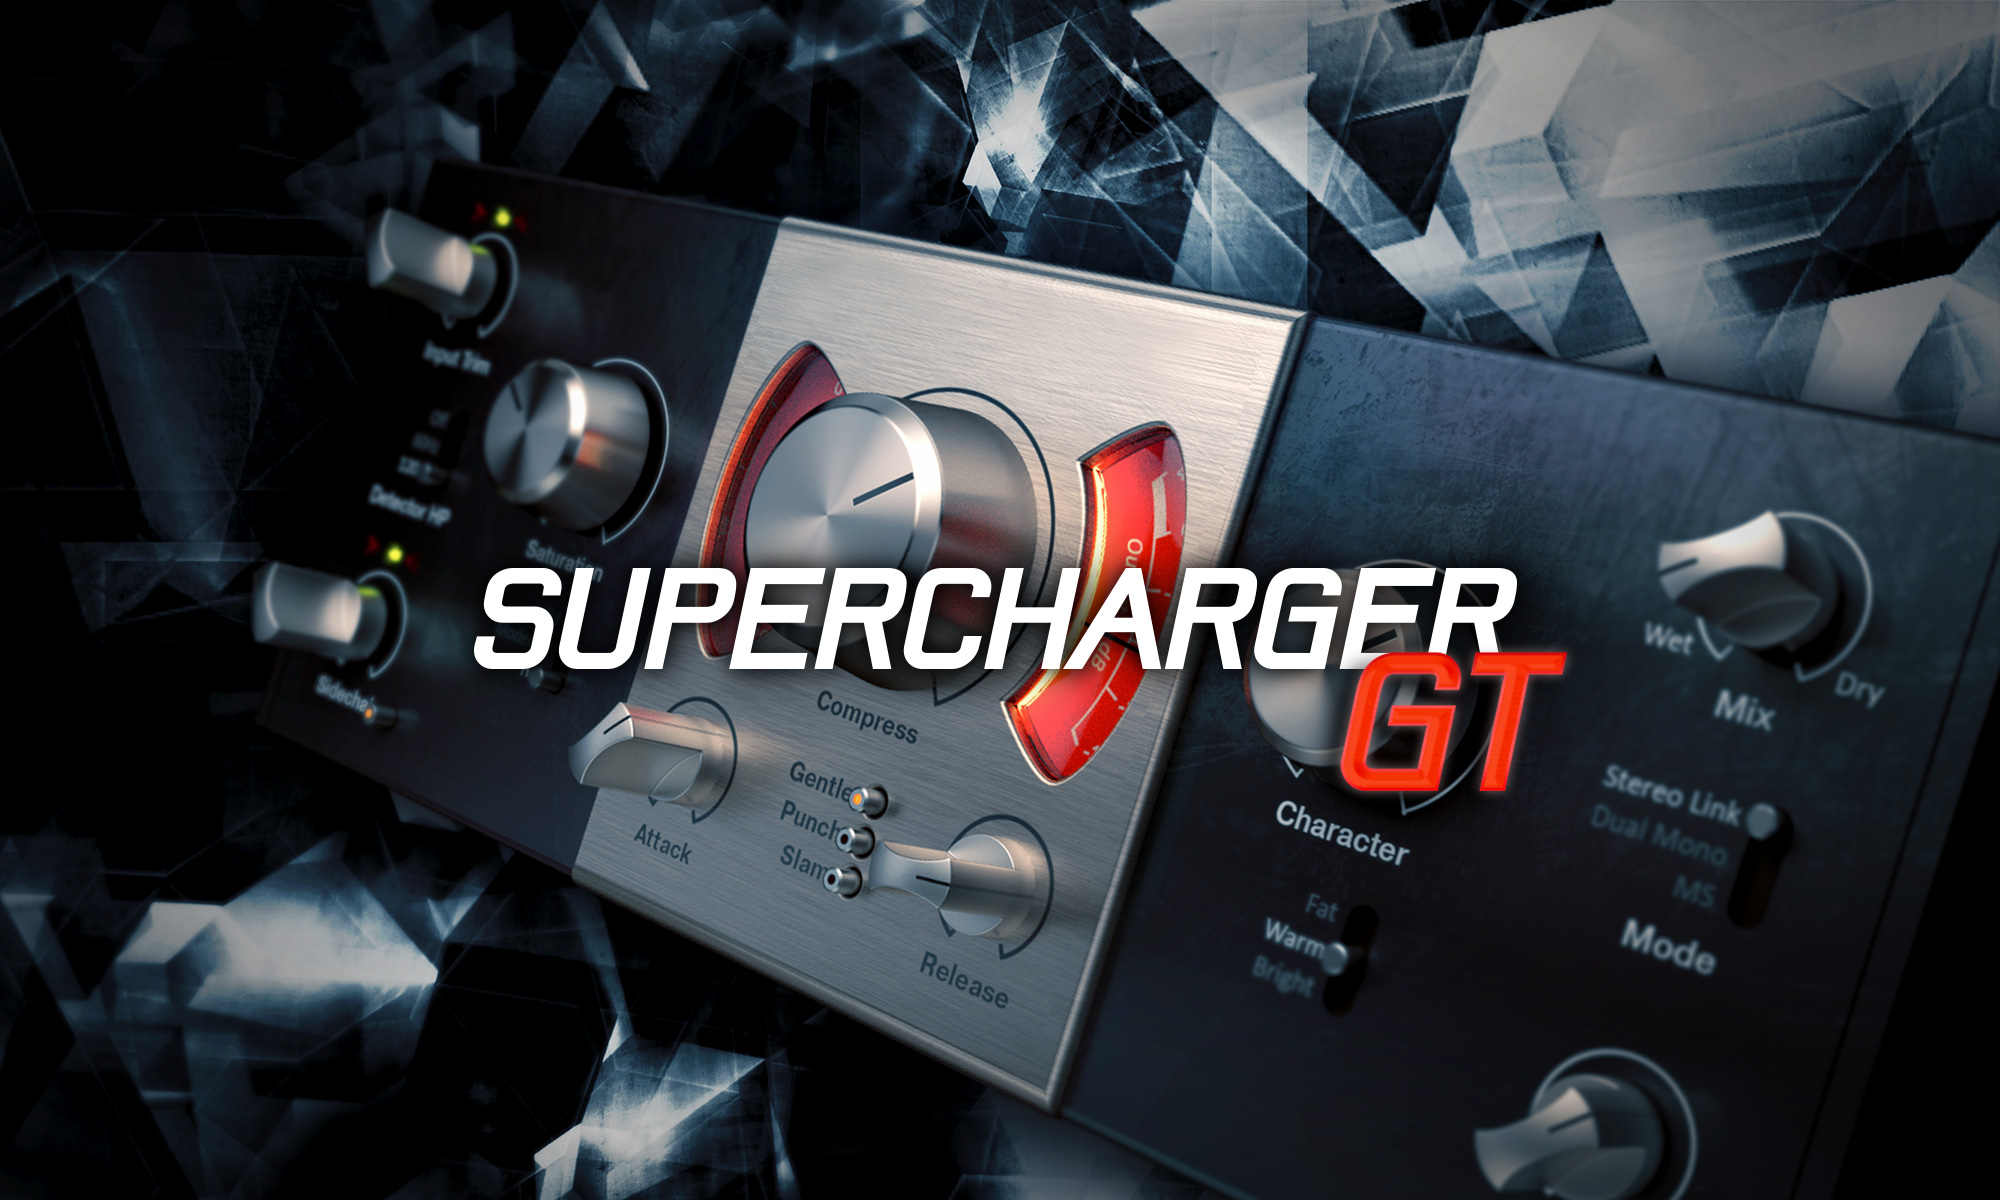 Supercharger-GT-manual-web-2000x1200.jpg